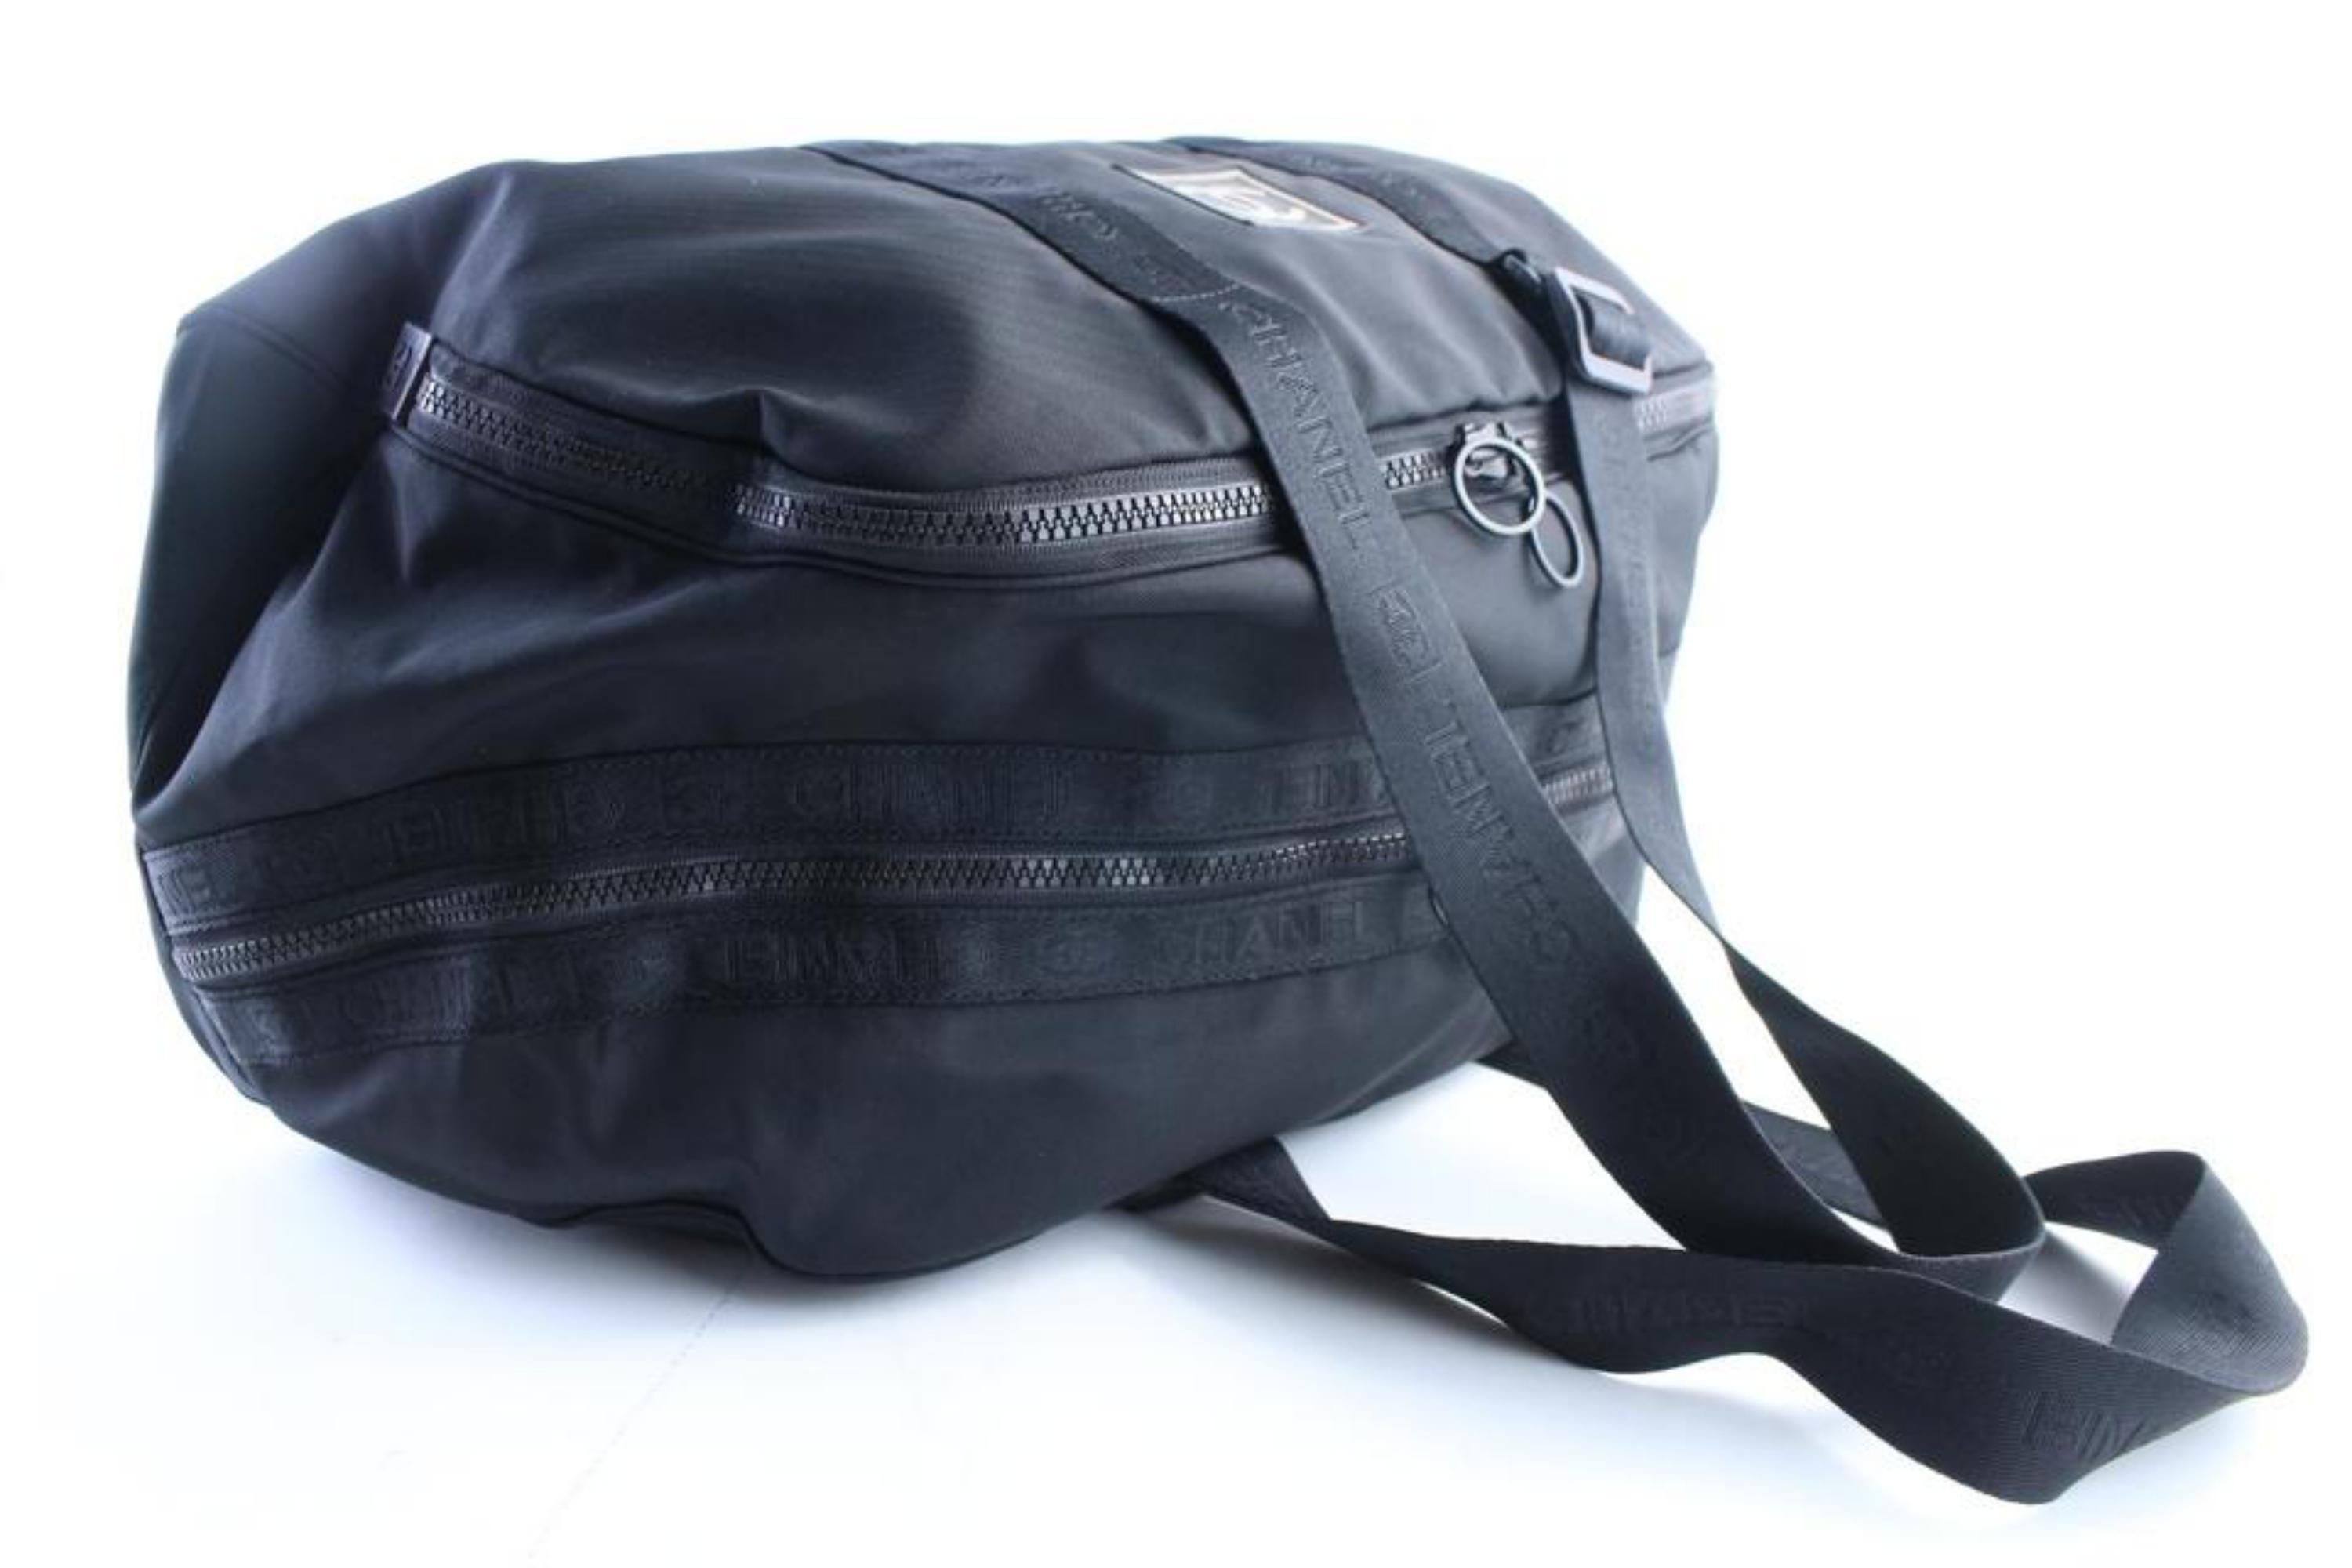 Chanel Duffle Cc Sports Boston 226424 Black Canvas Weekend/Travel Bag For Sale 2